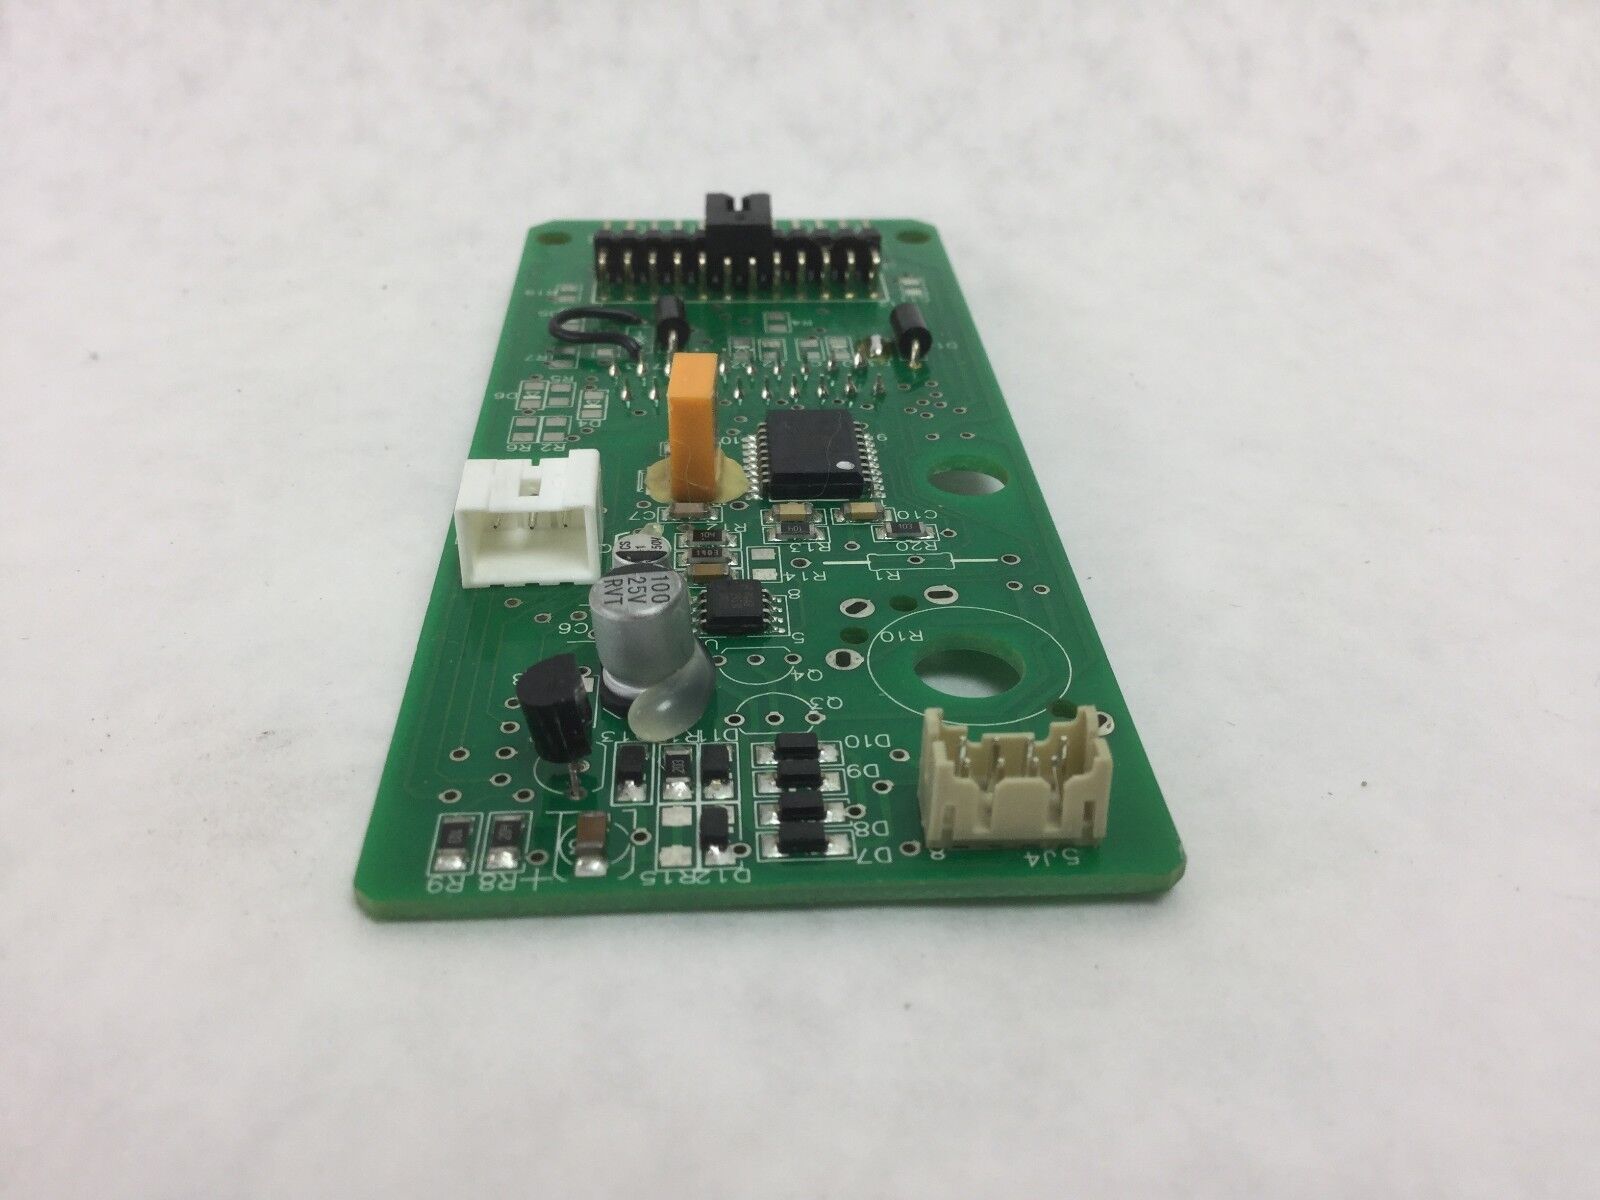 XY-2 E303692 Circuit Board, 22191-F Universal (610-191-0)